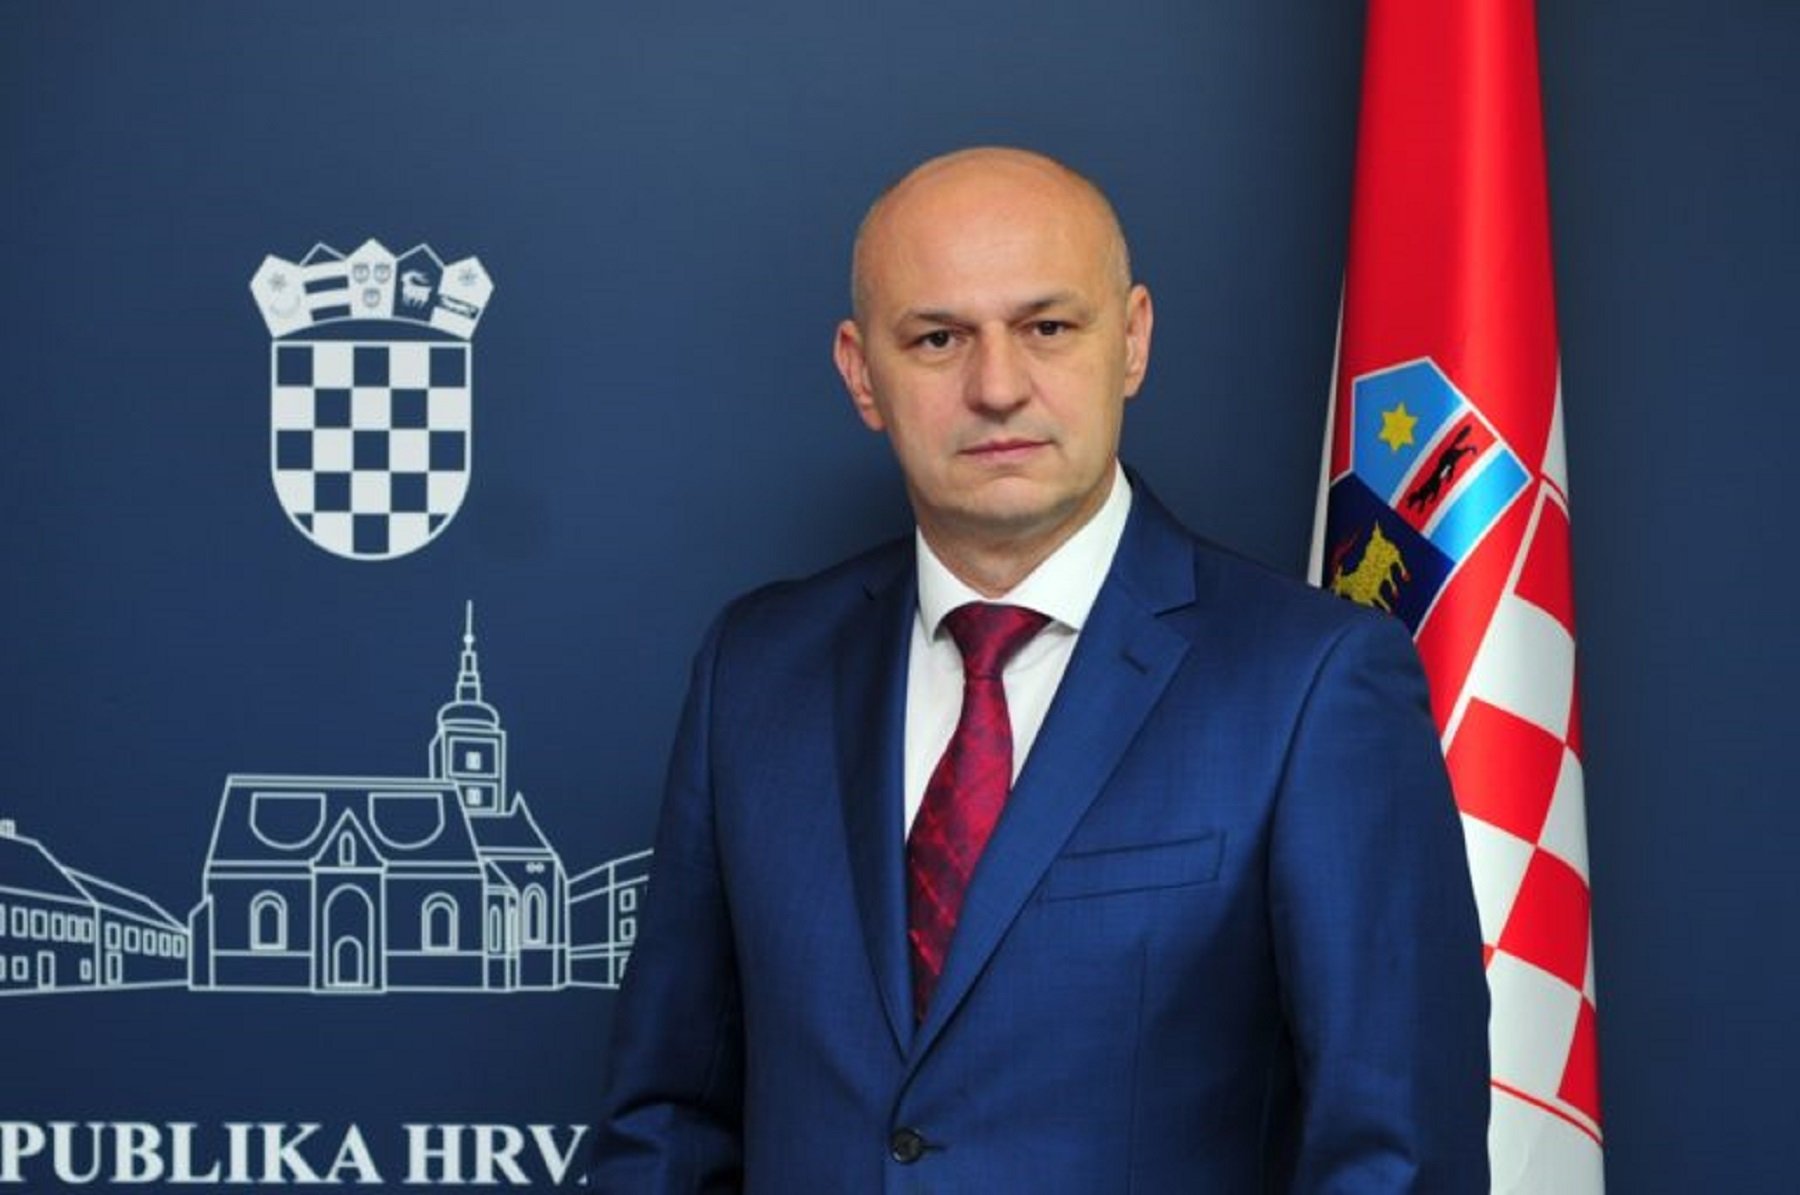 Mislav Kolakušić eurodiputat